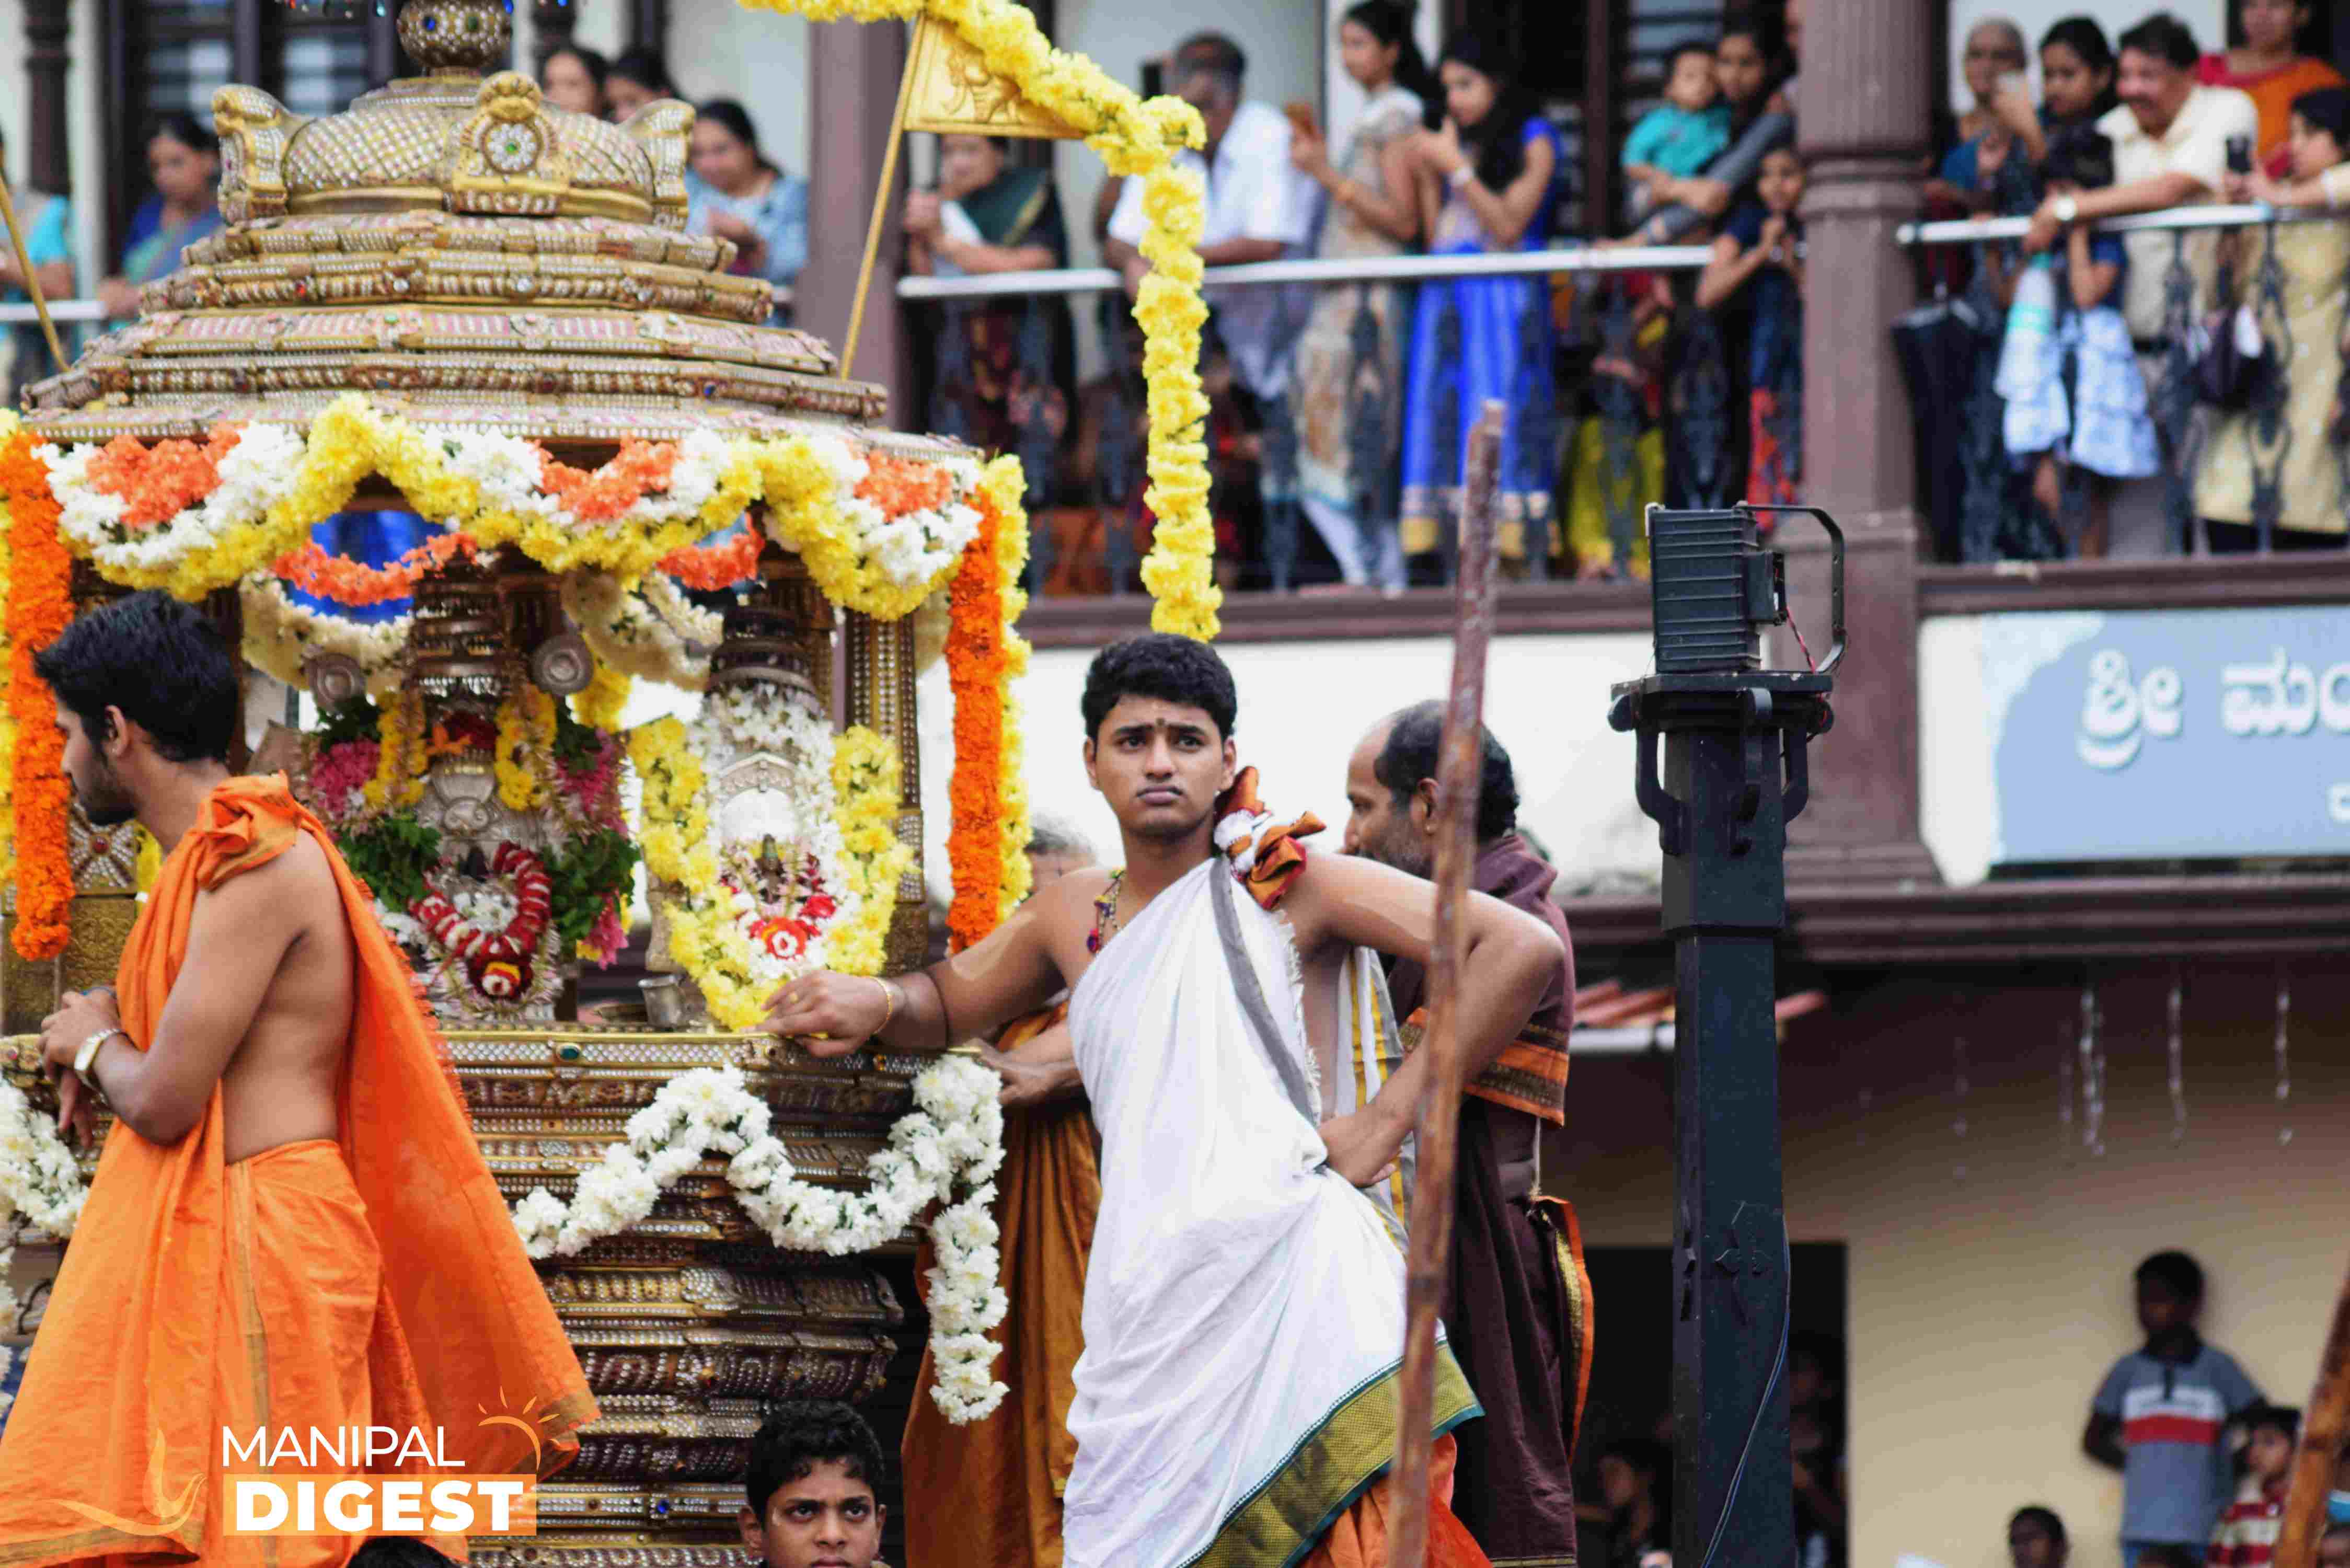 The Krishna navaratna chariot procession